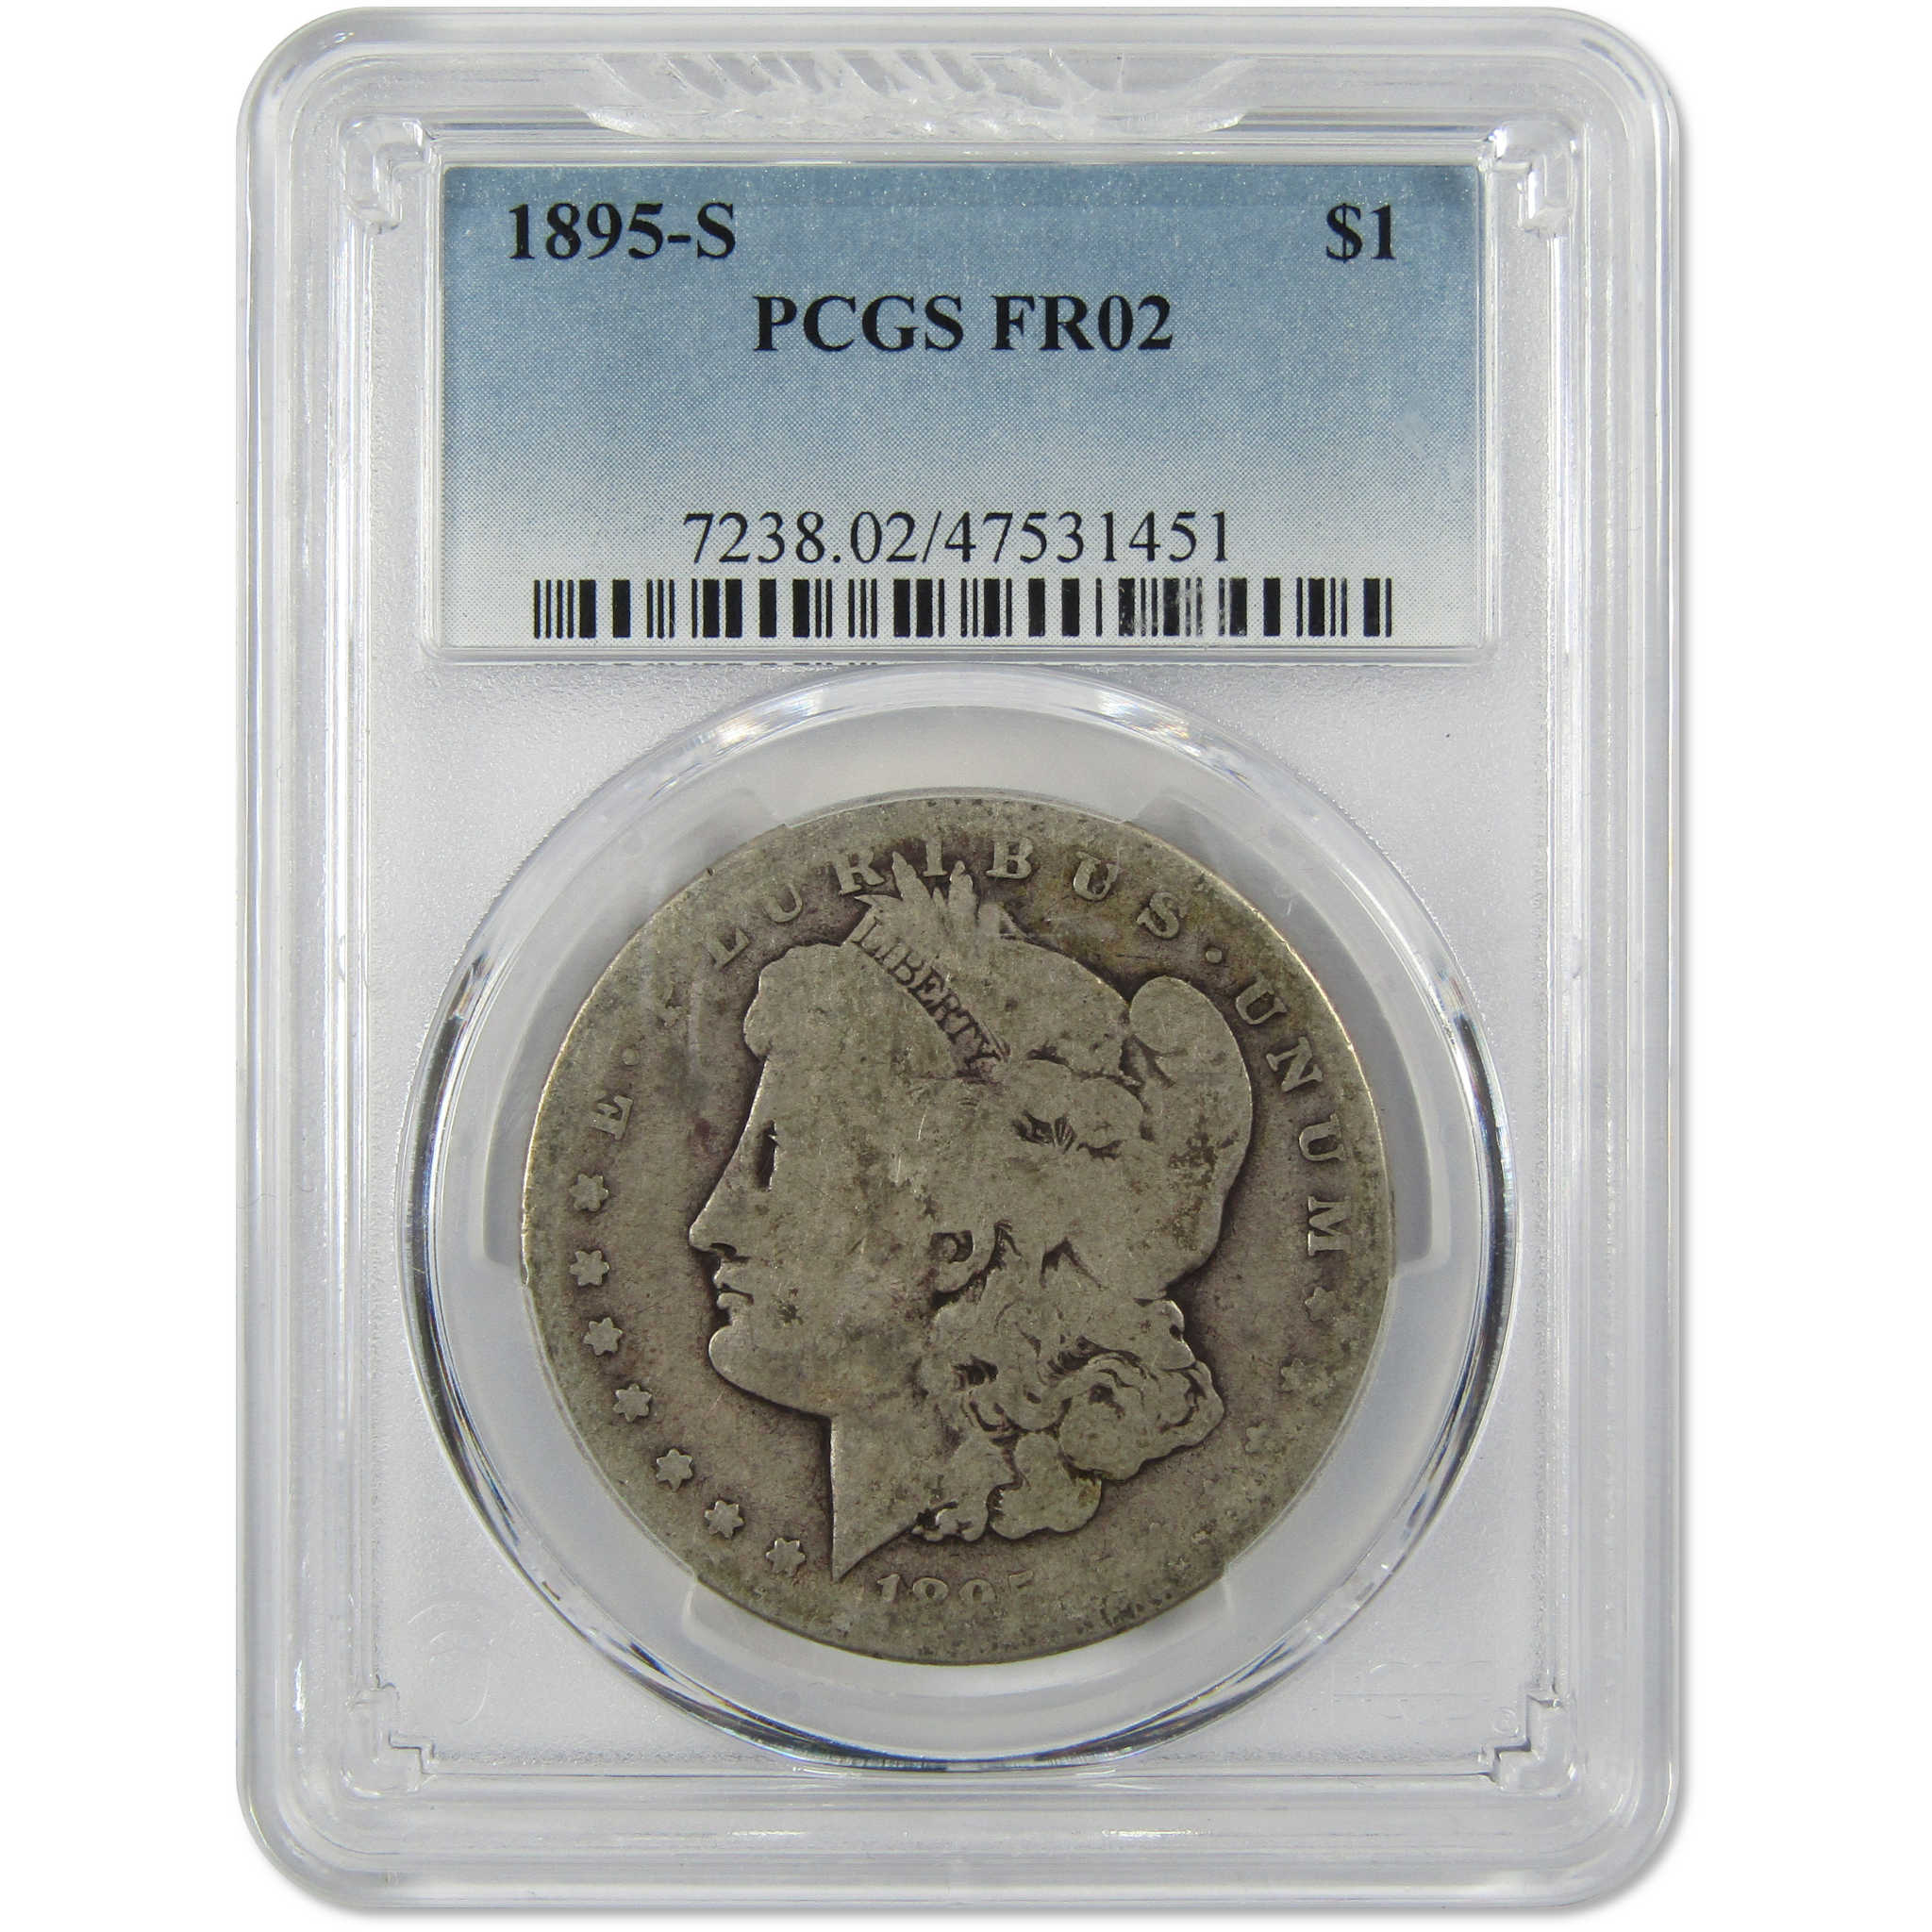 1895 S Morgan Dollar FR 2 PCGS 90% Silver $1 Coin SKU:I9649 - Morgan coin - Morgan silver dollar - Morgan silver dollar for sale - Profile Coins &amp; Collectibles